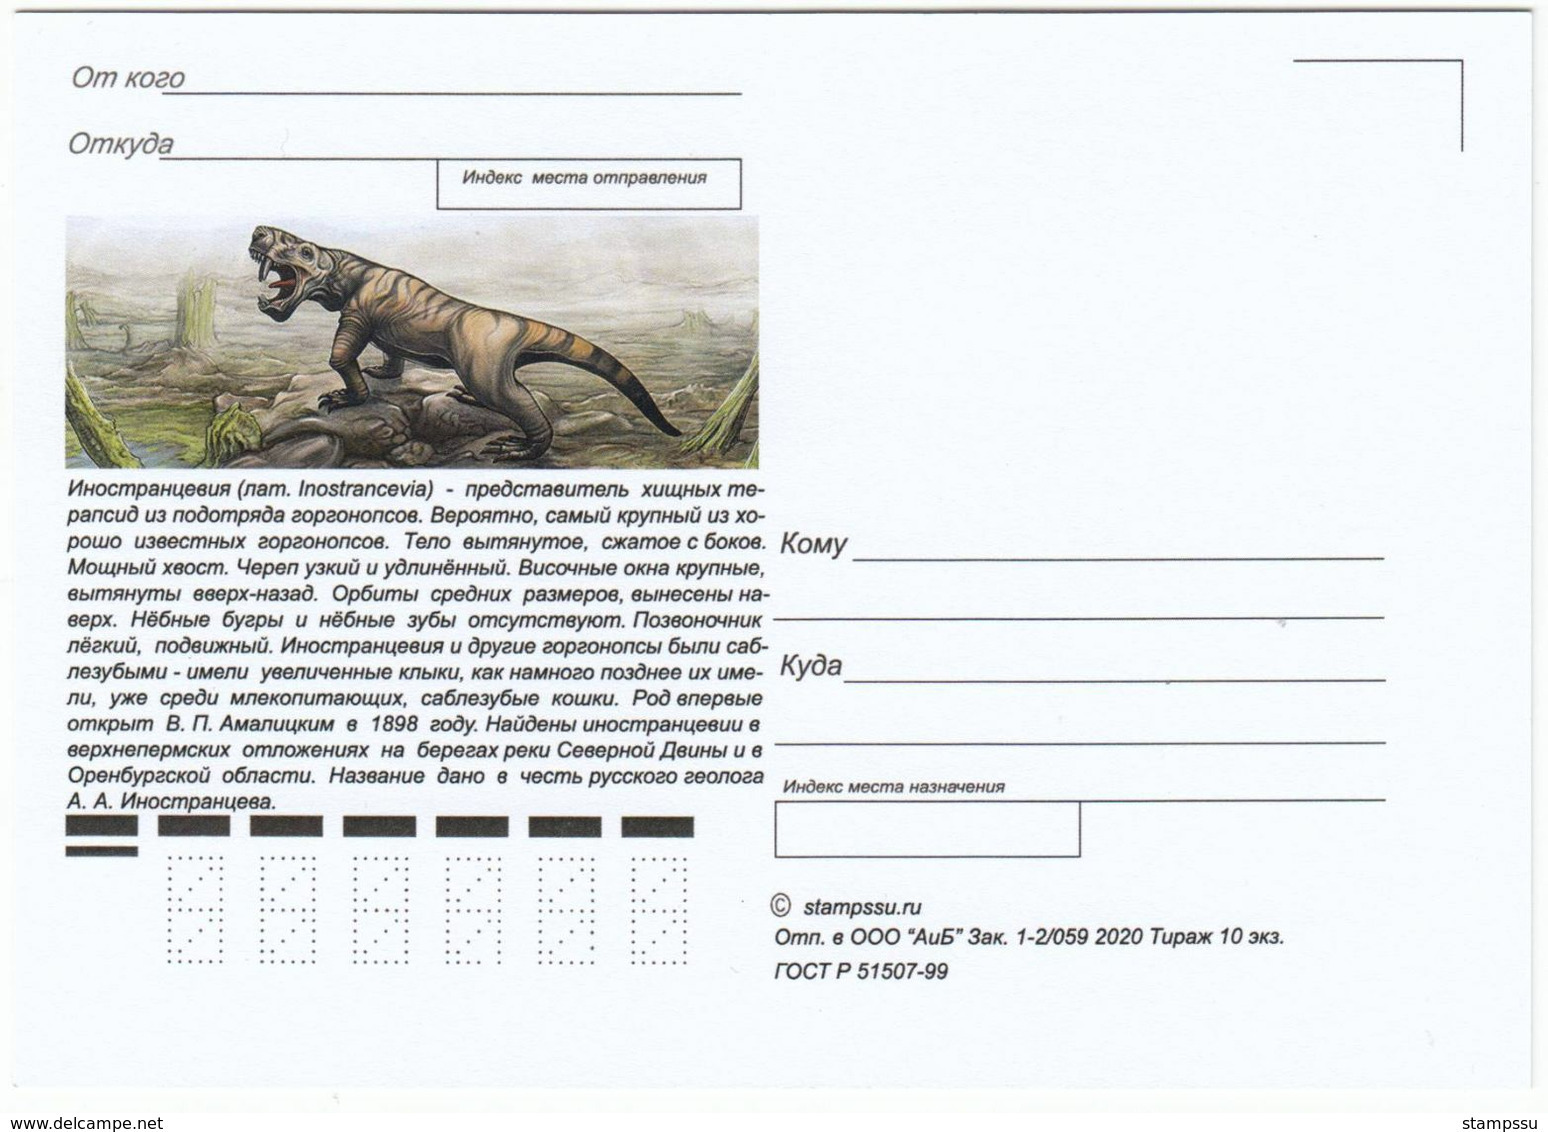 2872-2875 Mih 2655-2658 Russia 06 2020 NO EXTRA FEES maximum card 2 Prehistoric Fauna Dinosaurs Mammoths Paleontological